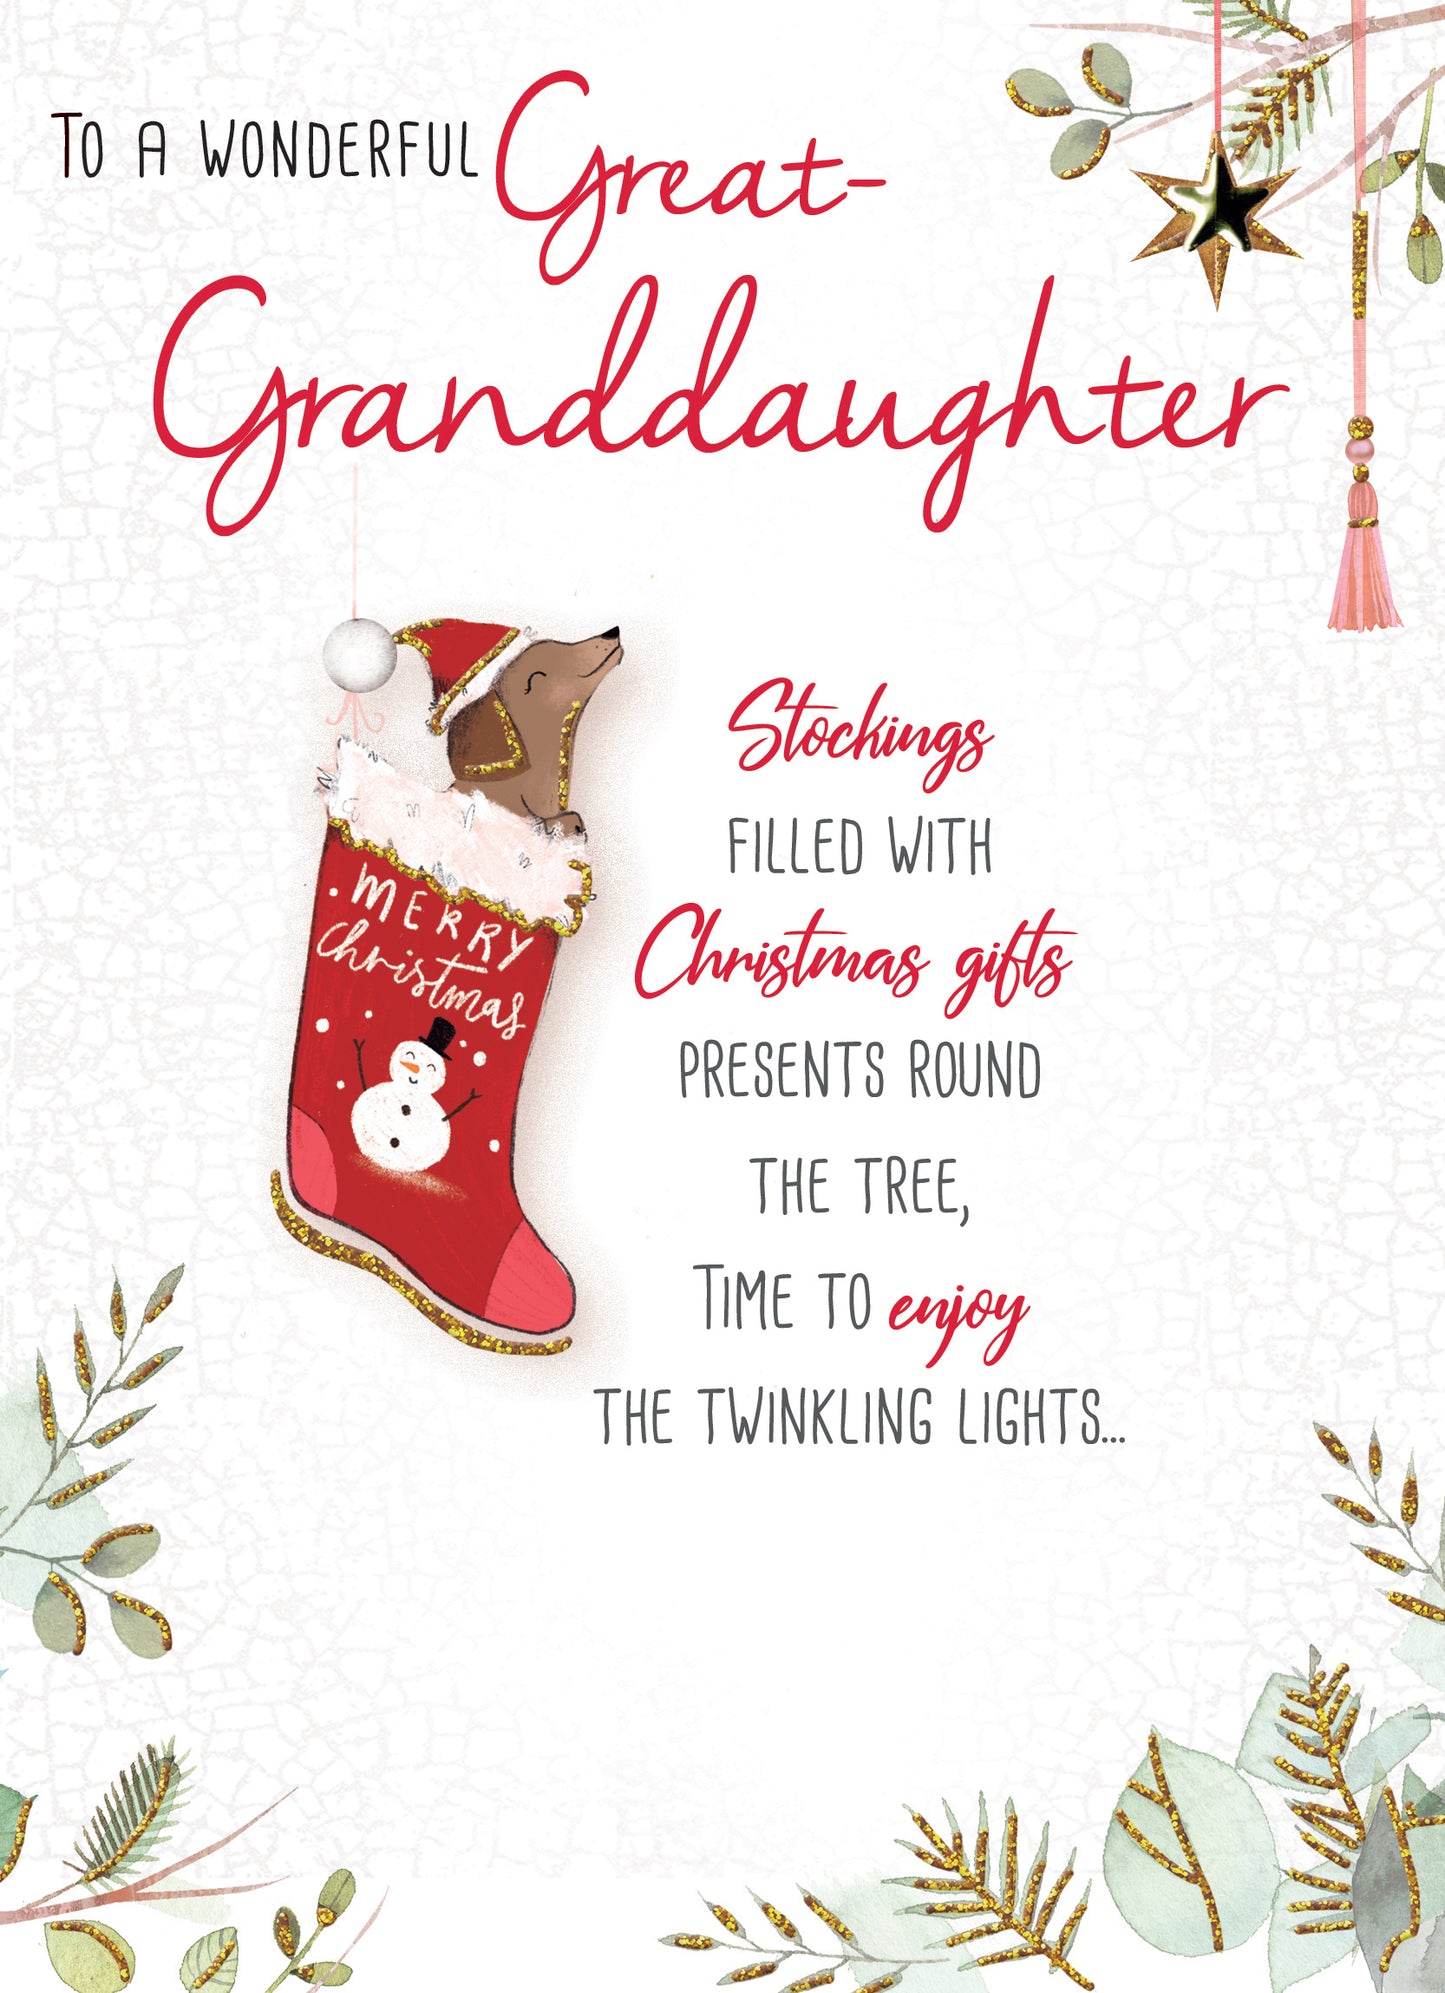 Great-Granddaughter Embellished Christmas Card